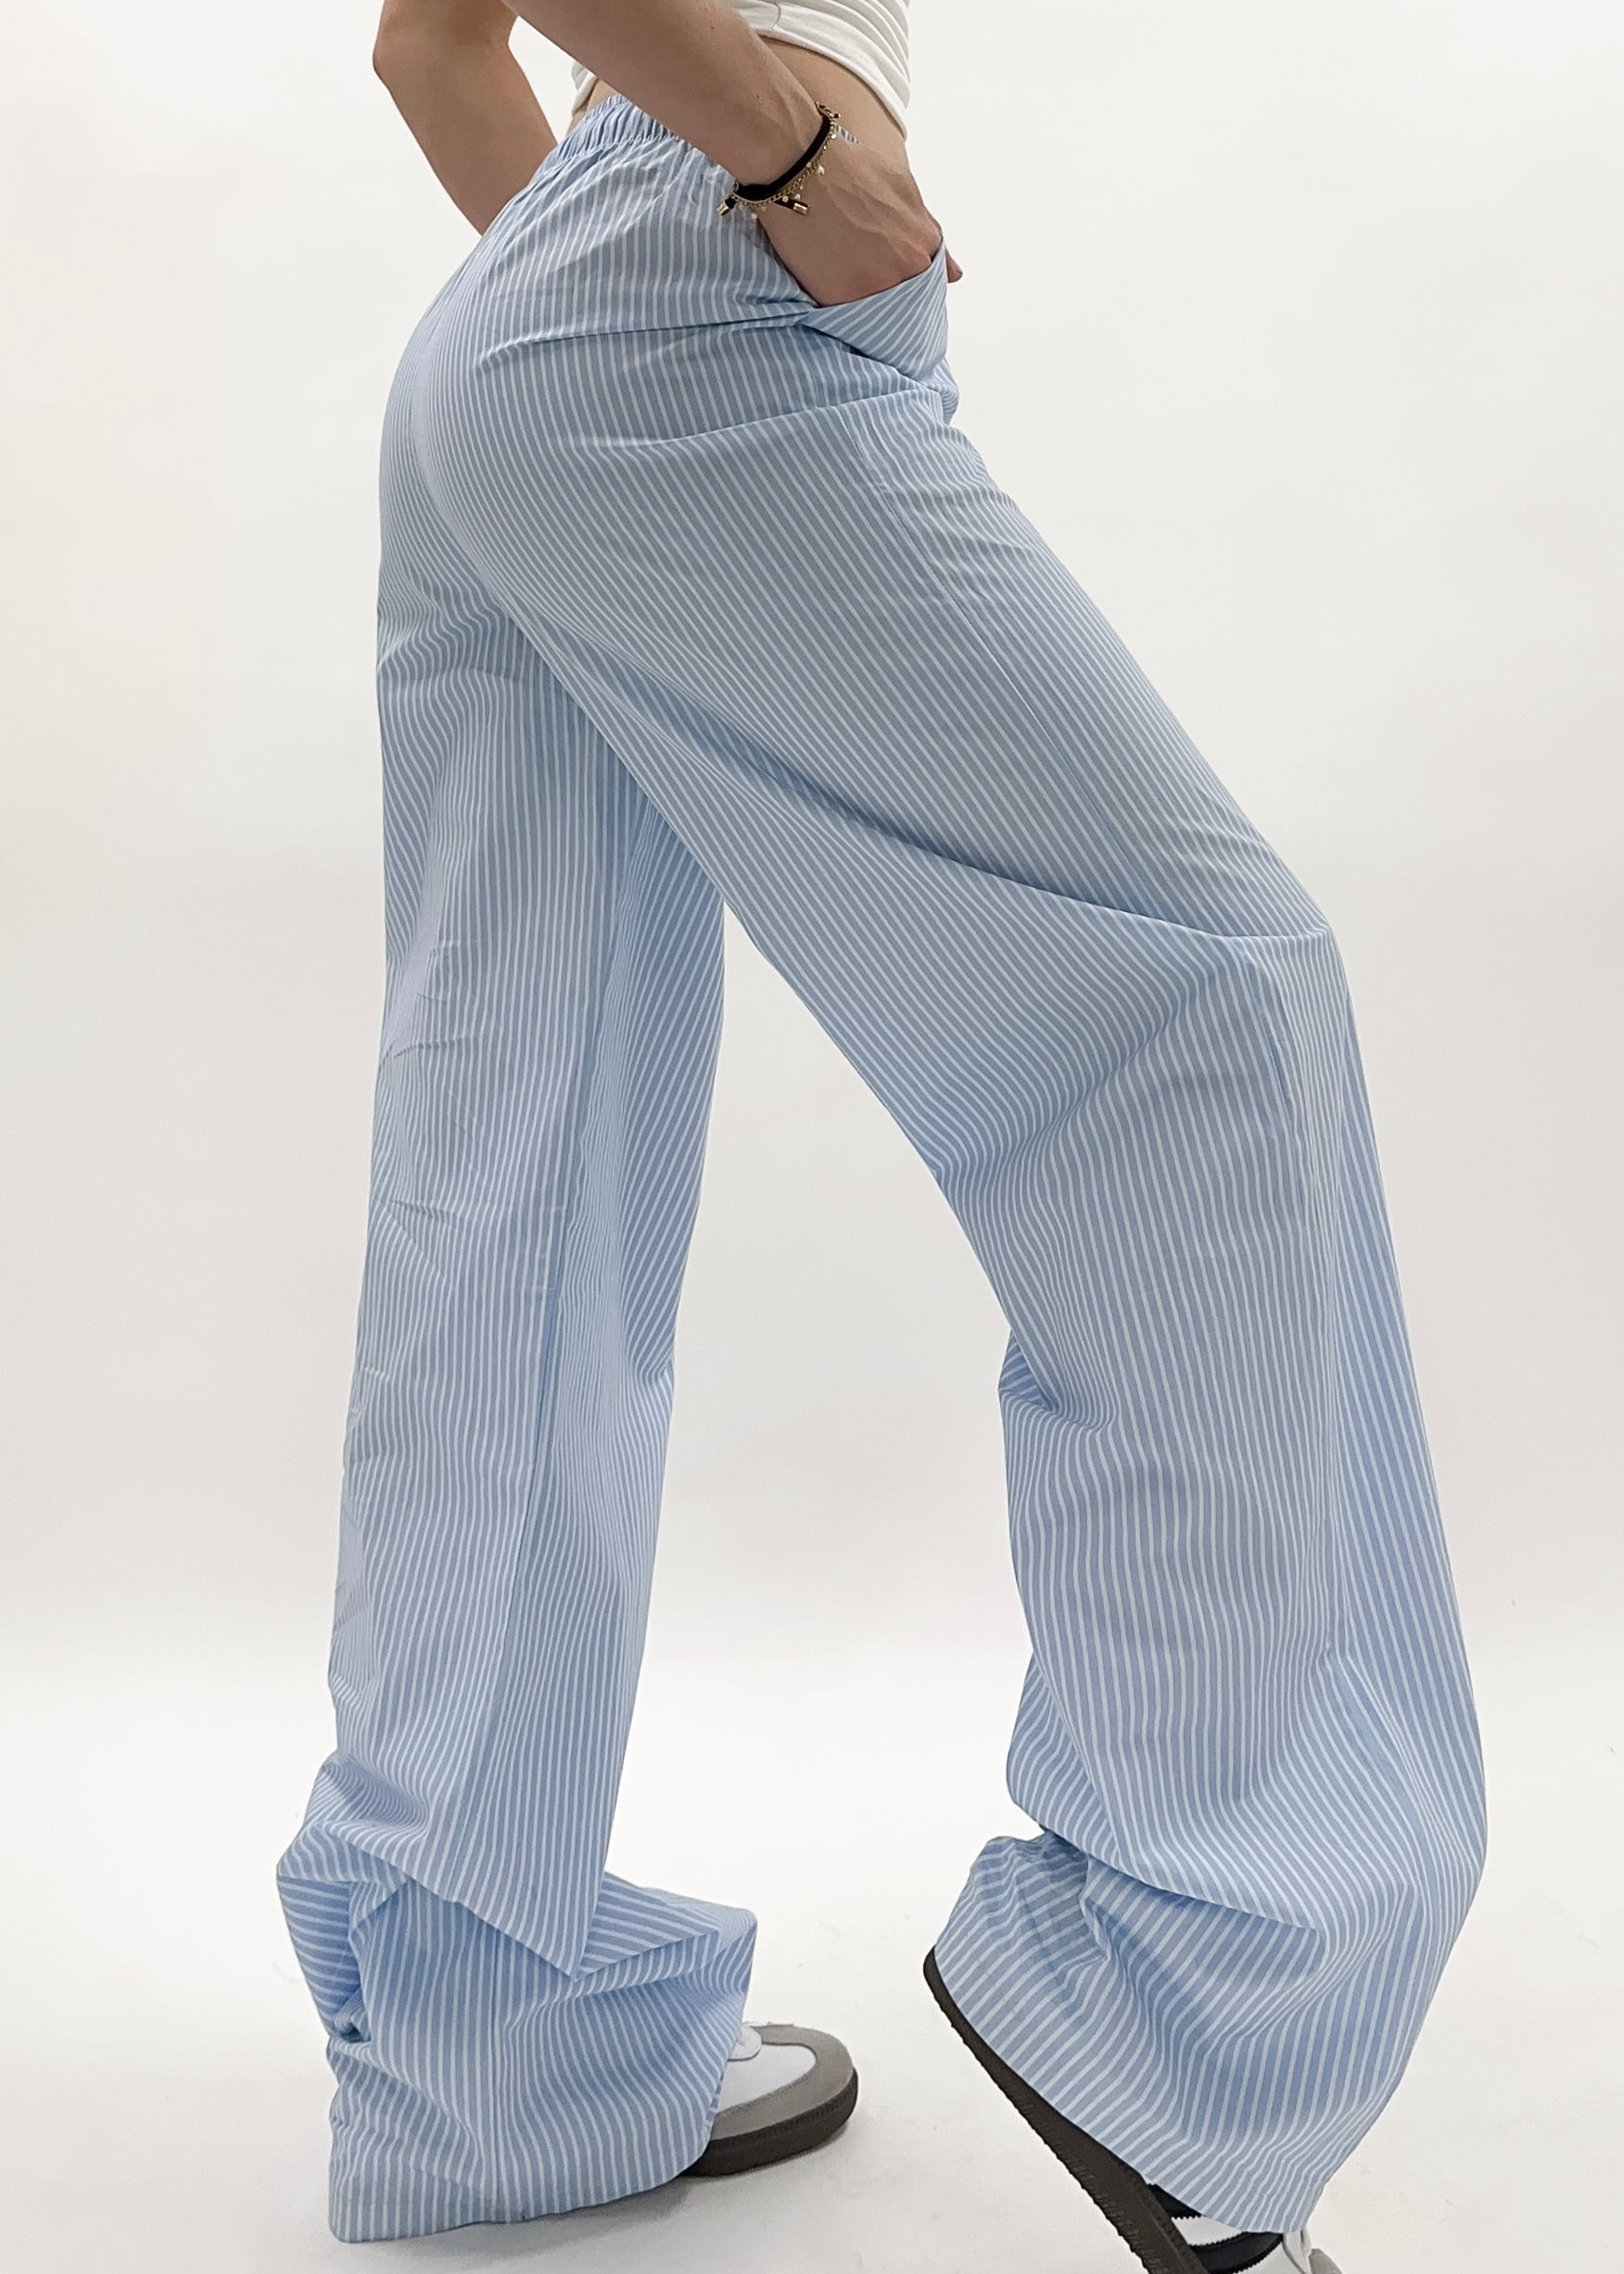 Cotton pants striped (TALL) blue/white